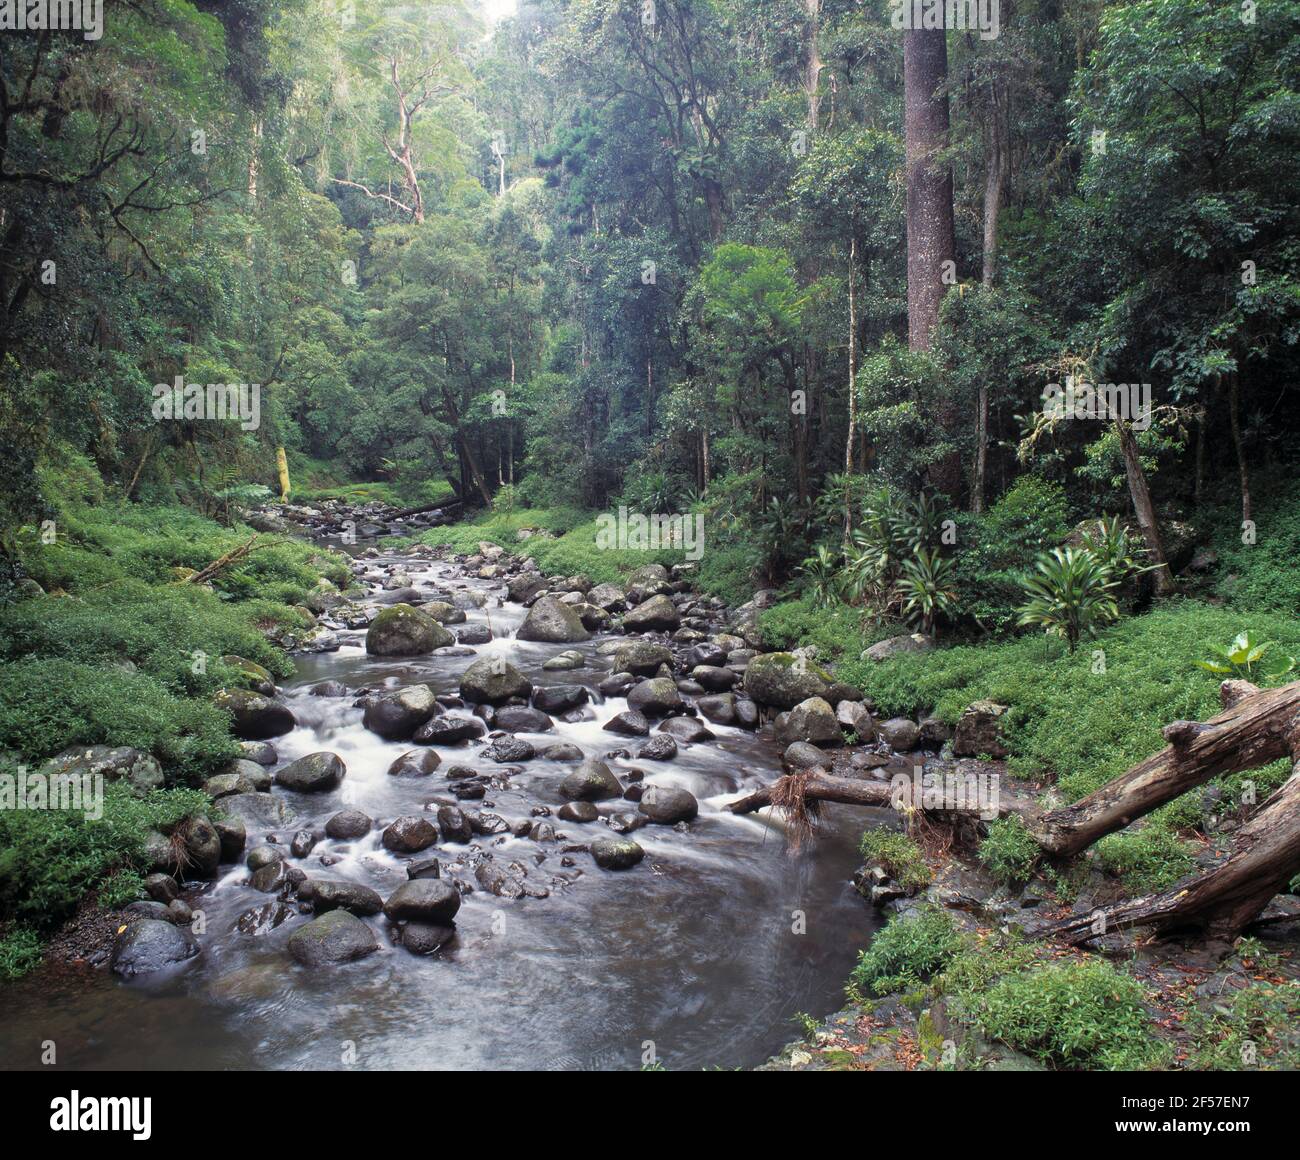 Australia. Queensland. Lamington National Park. Fast flowing stream through forest. Stock Photo